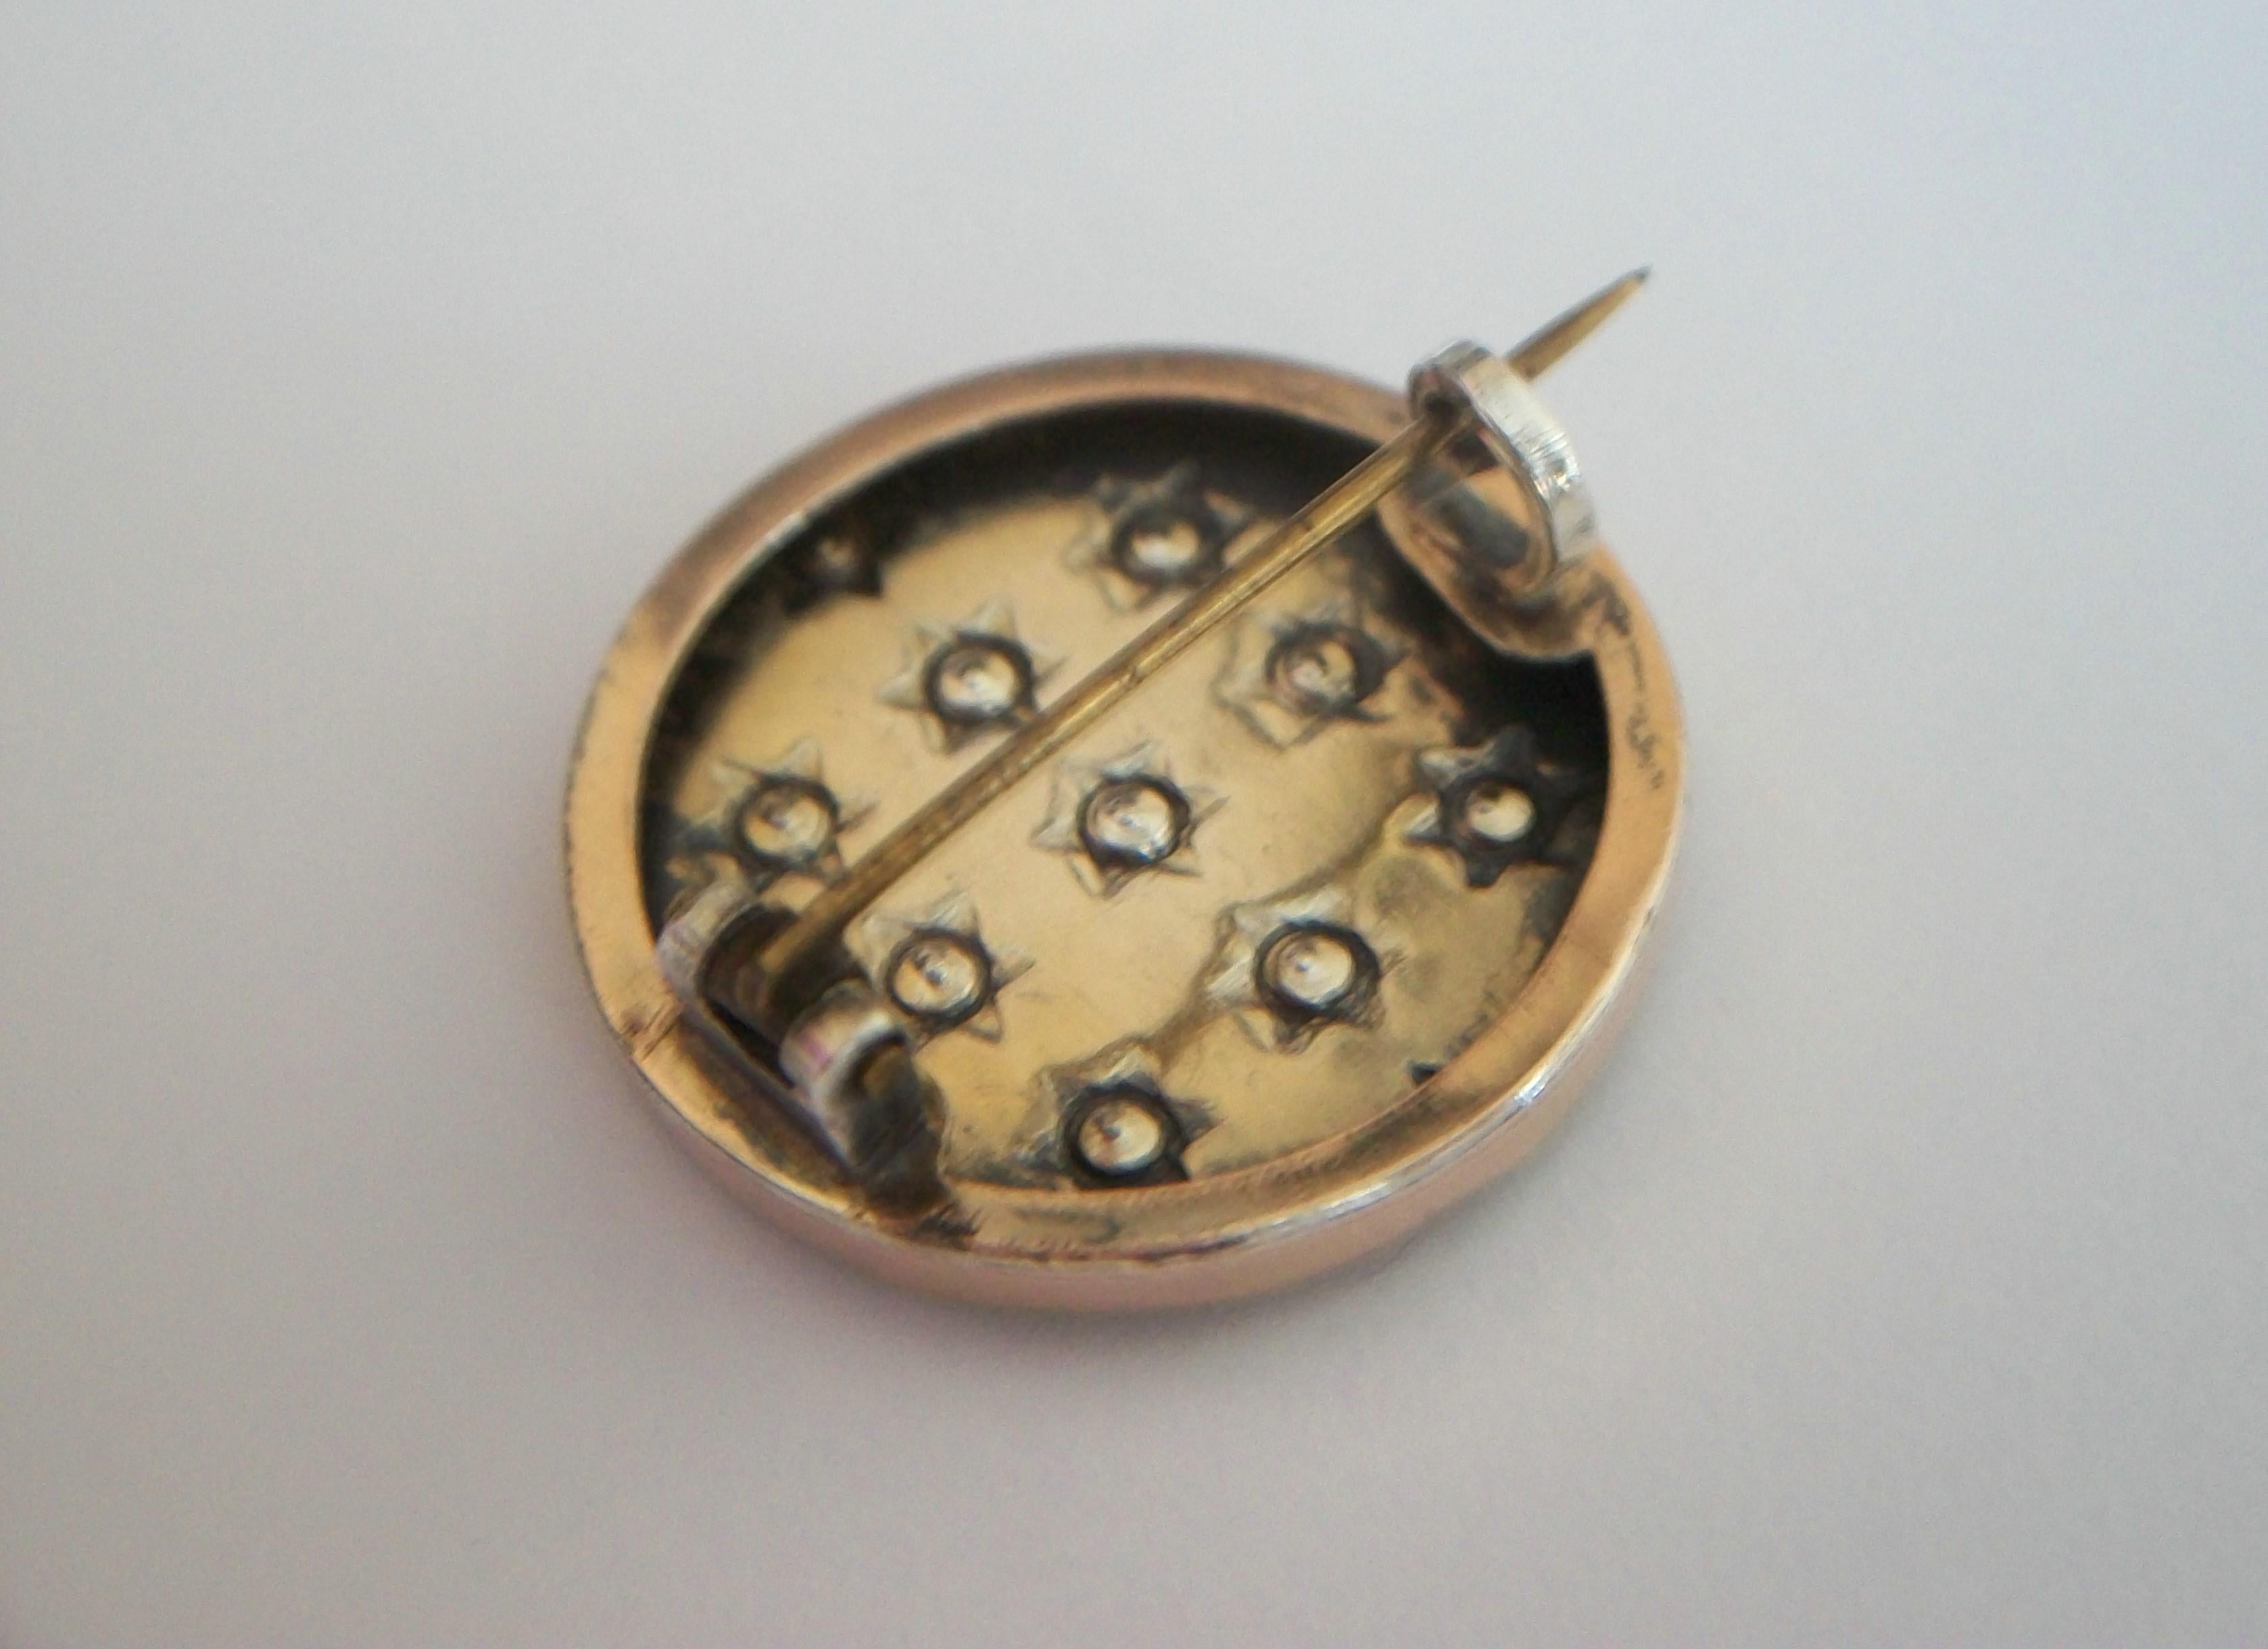 Victorian Rare Antique 'Star of David' Brooch / Pin with Crystals - France - Circa 1880